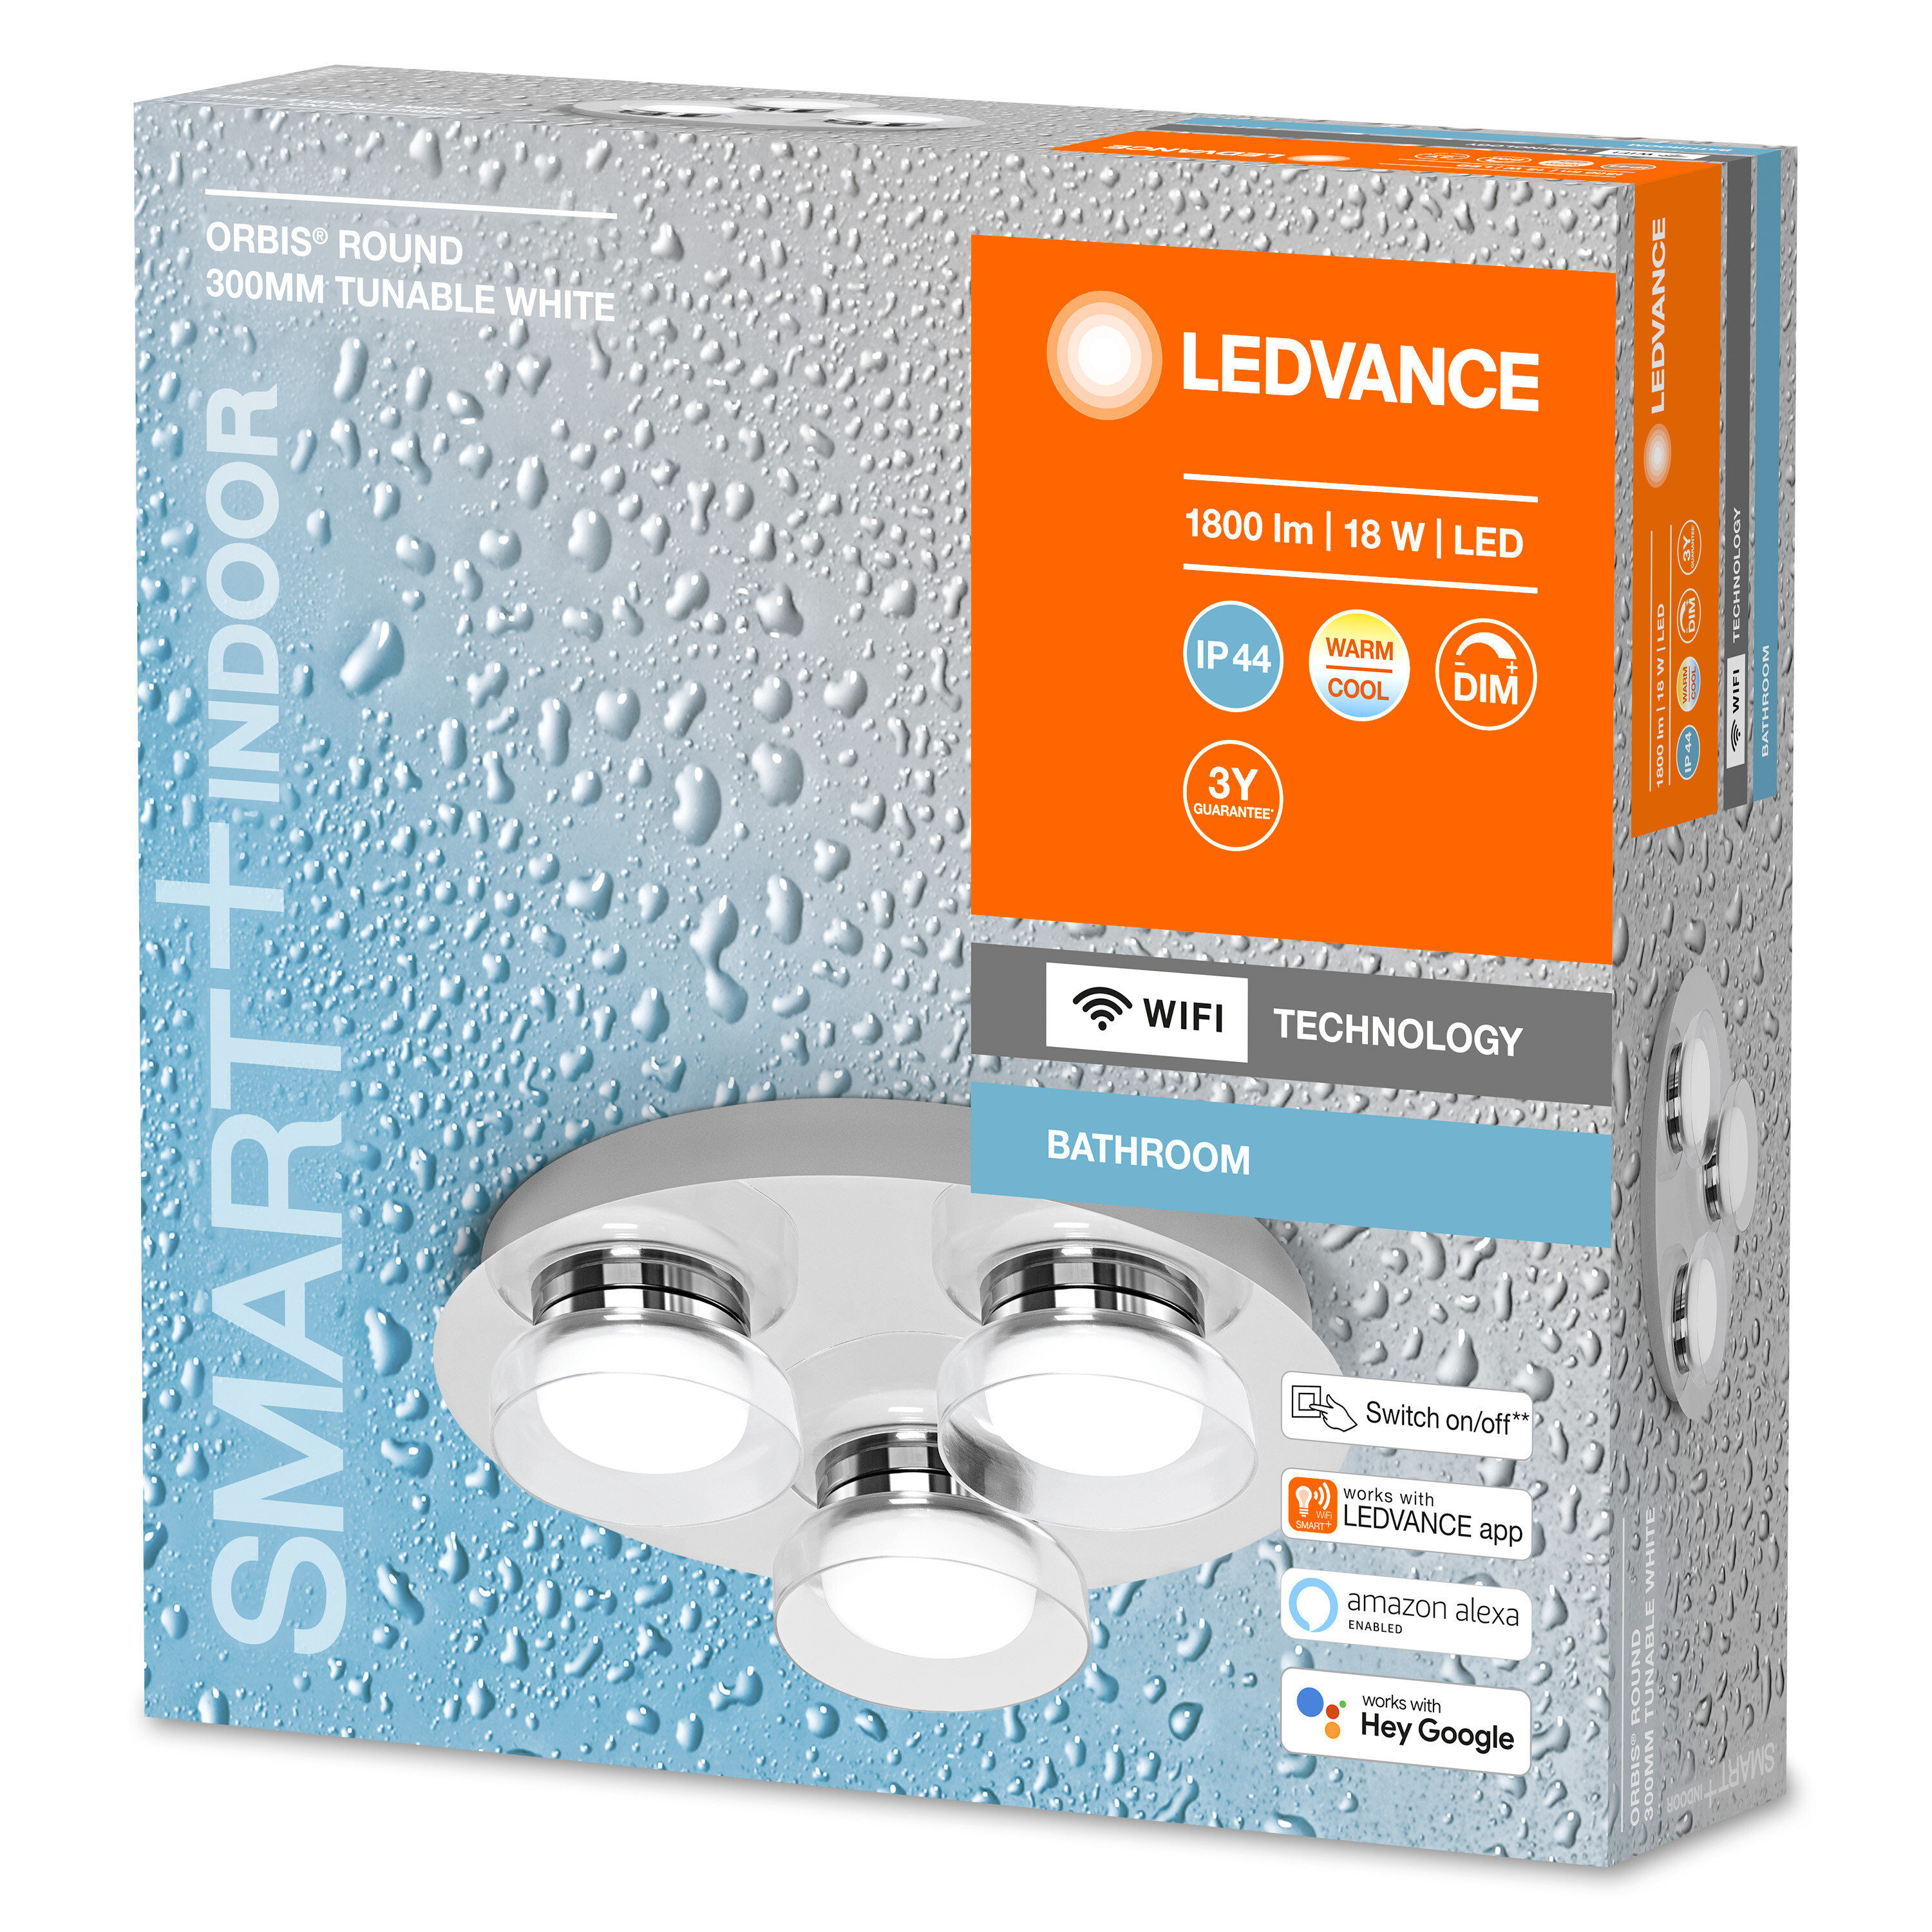 DECORATIVE CEILING WIFI Lichfarbe LEDVANCE änderbar TECHNOLOGY BATHROOM Badezimmerbeleuchtung WALL WITH AND